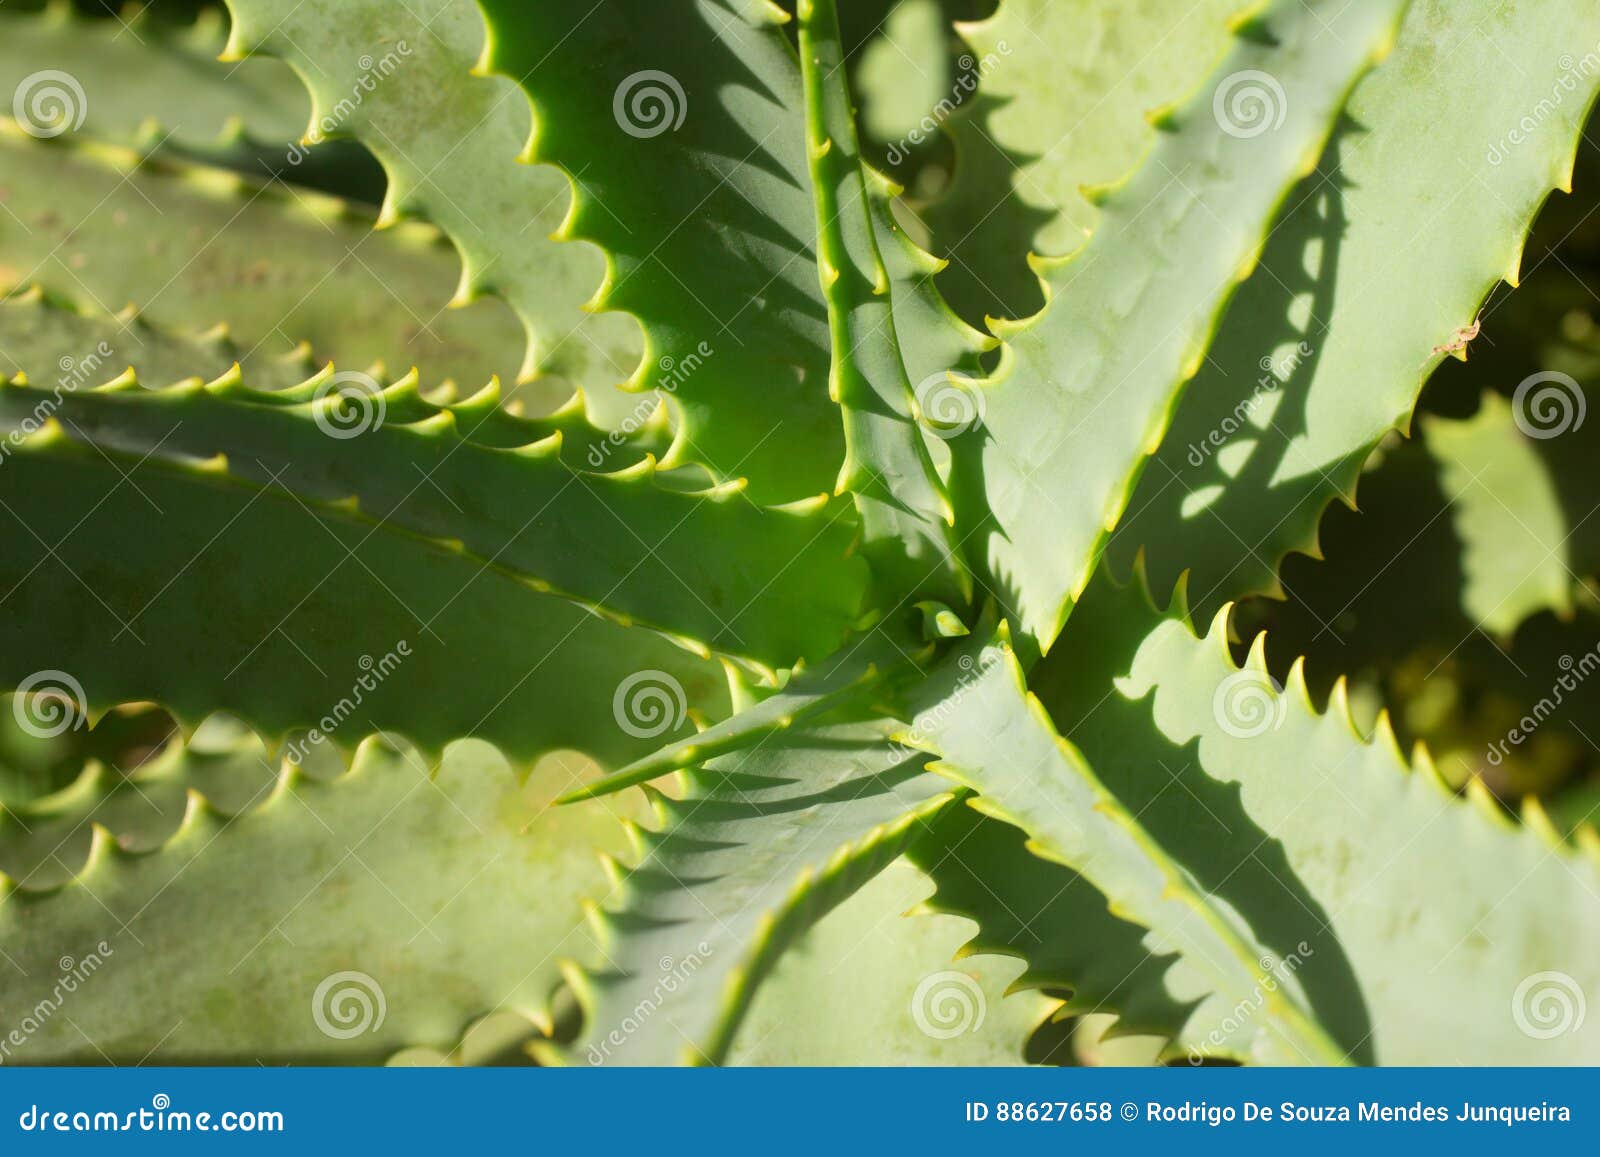 close up aloe vera plant